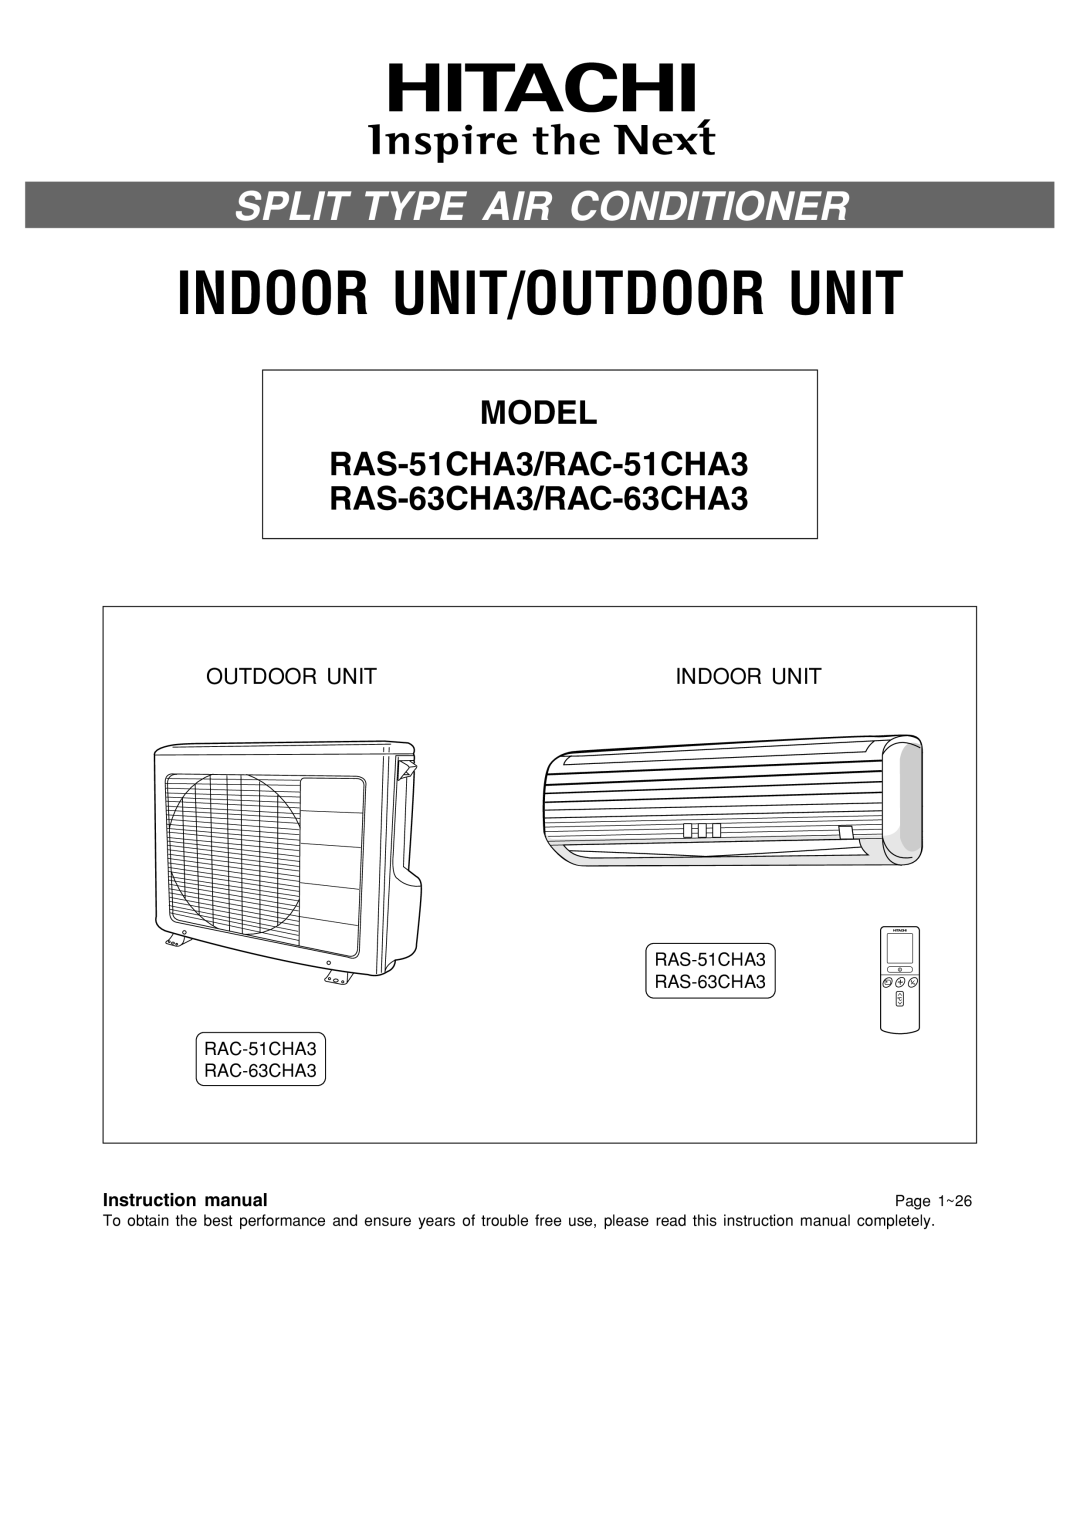 Hitachi RAS-51CHA3 instruction manual Indoor Unit/Outdoor Unit, Split Type Air Conditioner, Page 1~26 